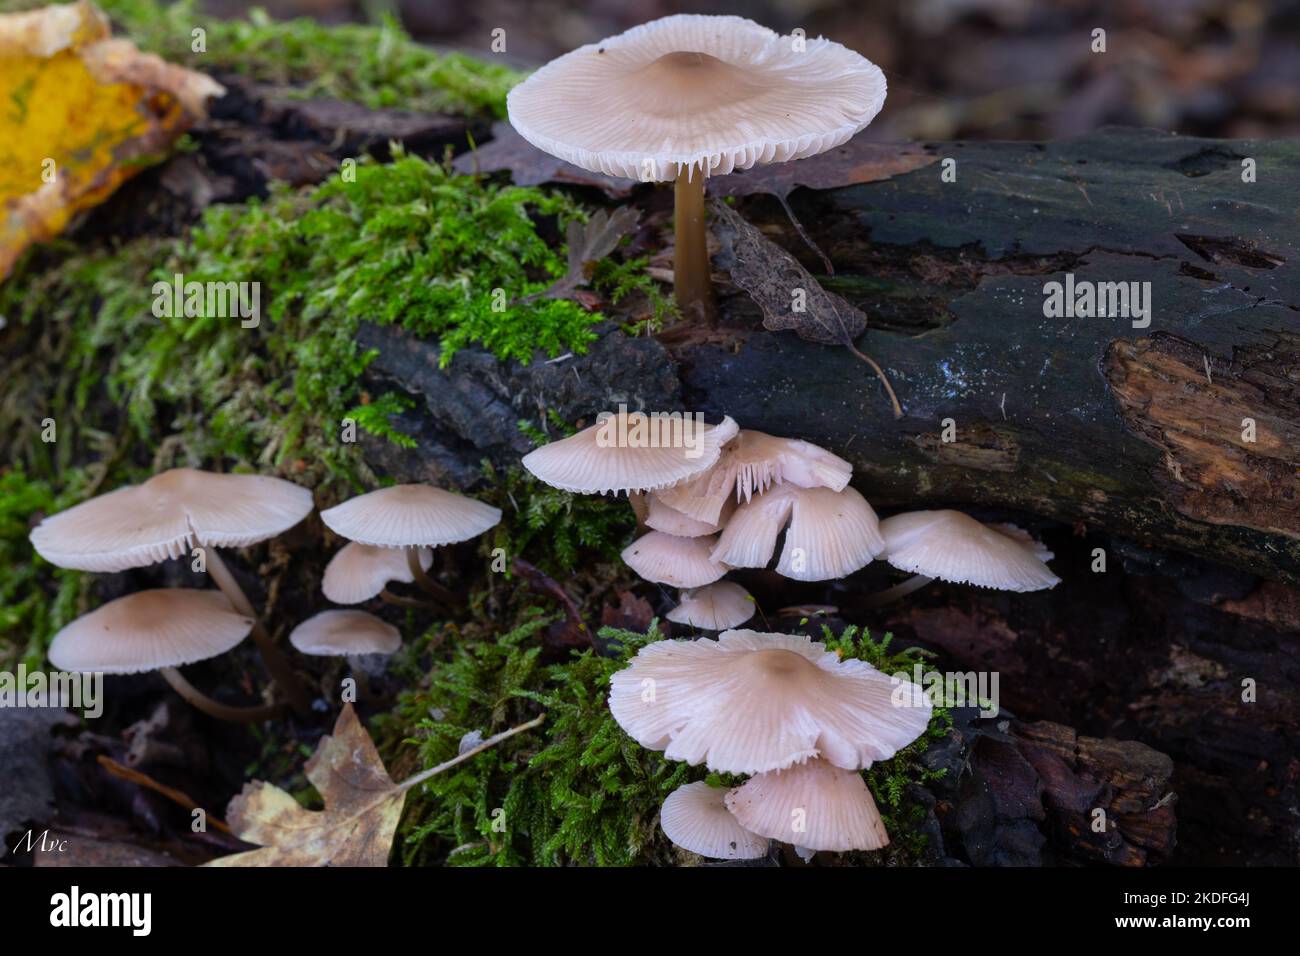 A closeup of marasmius oreades mushrooms growing in a forest Stock Photo